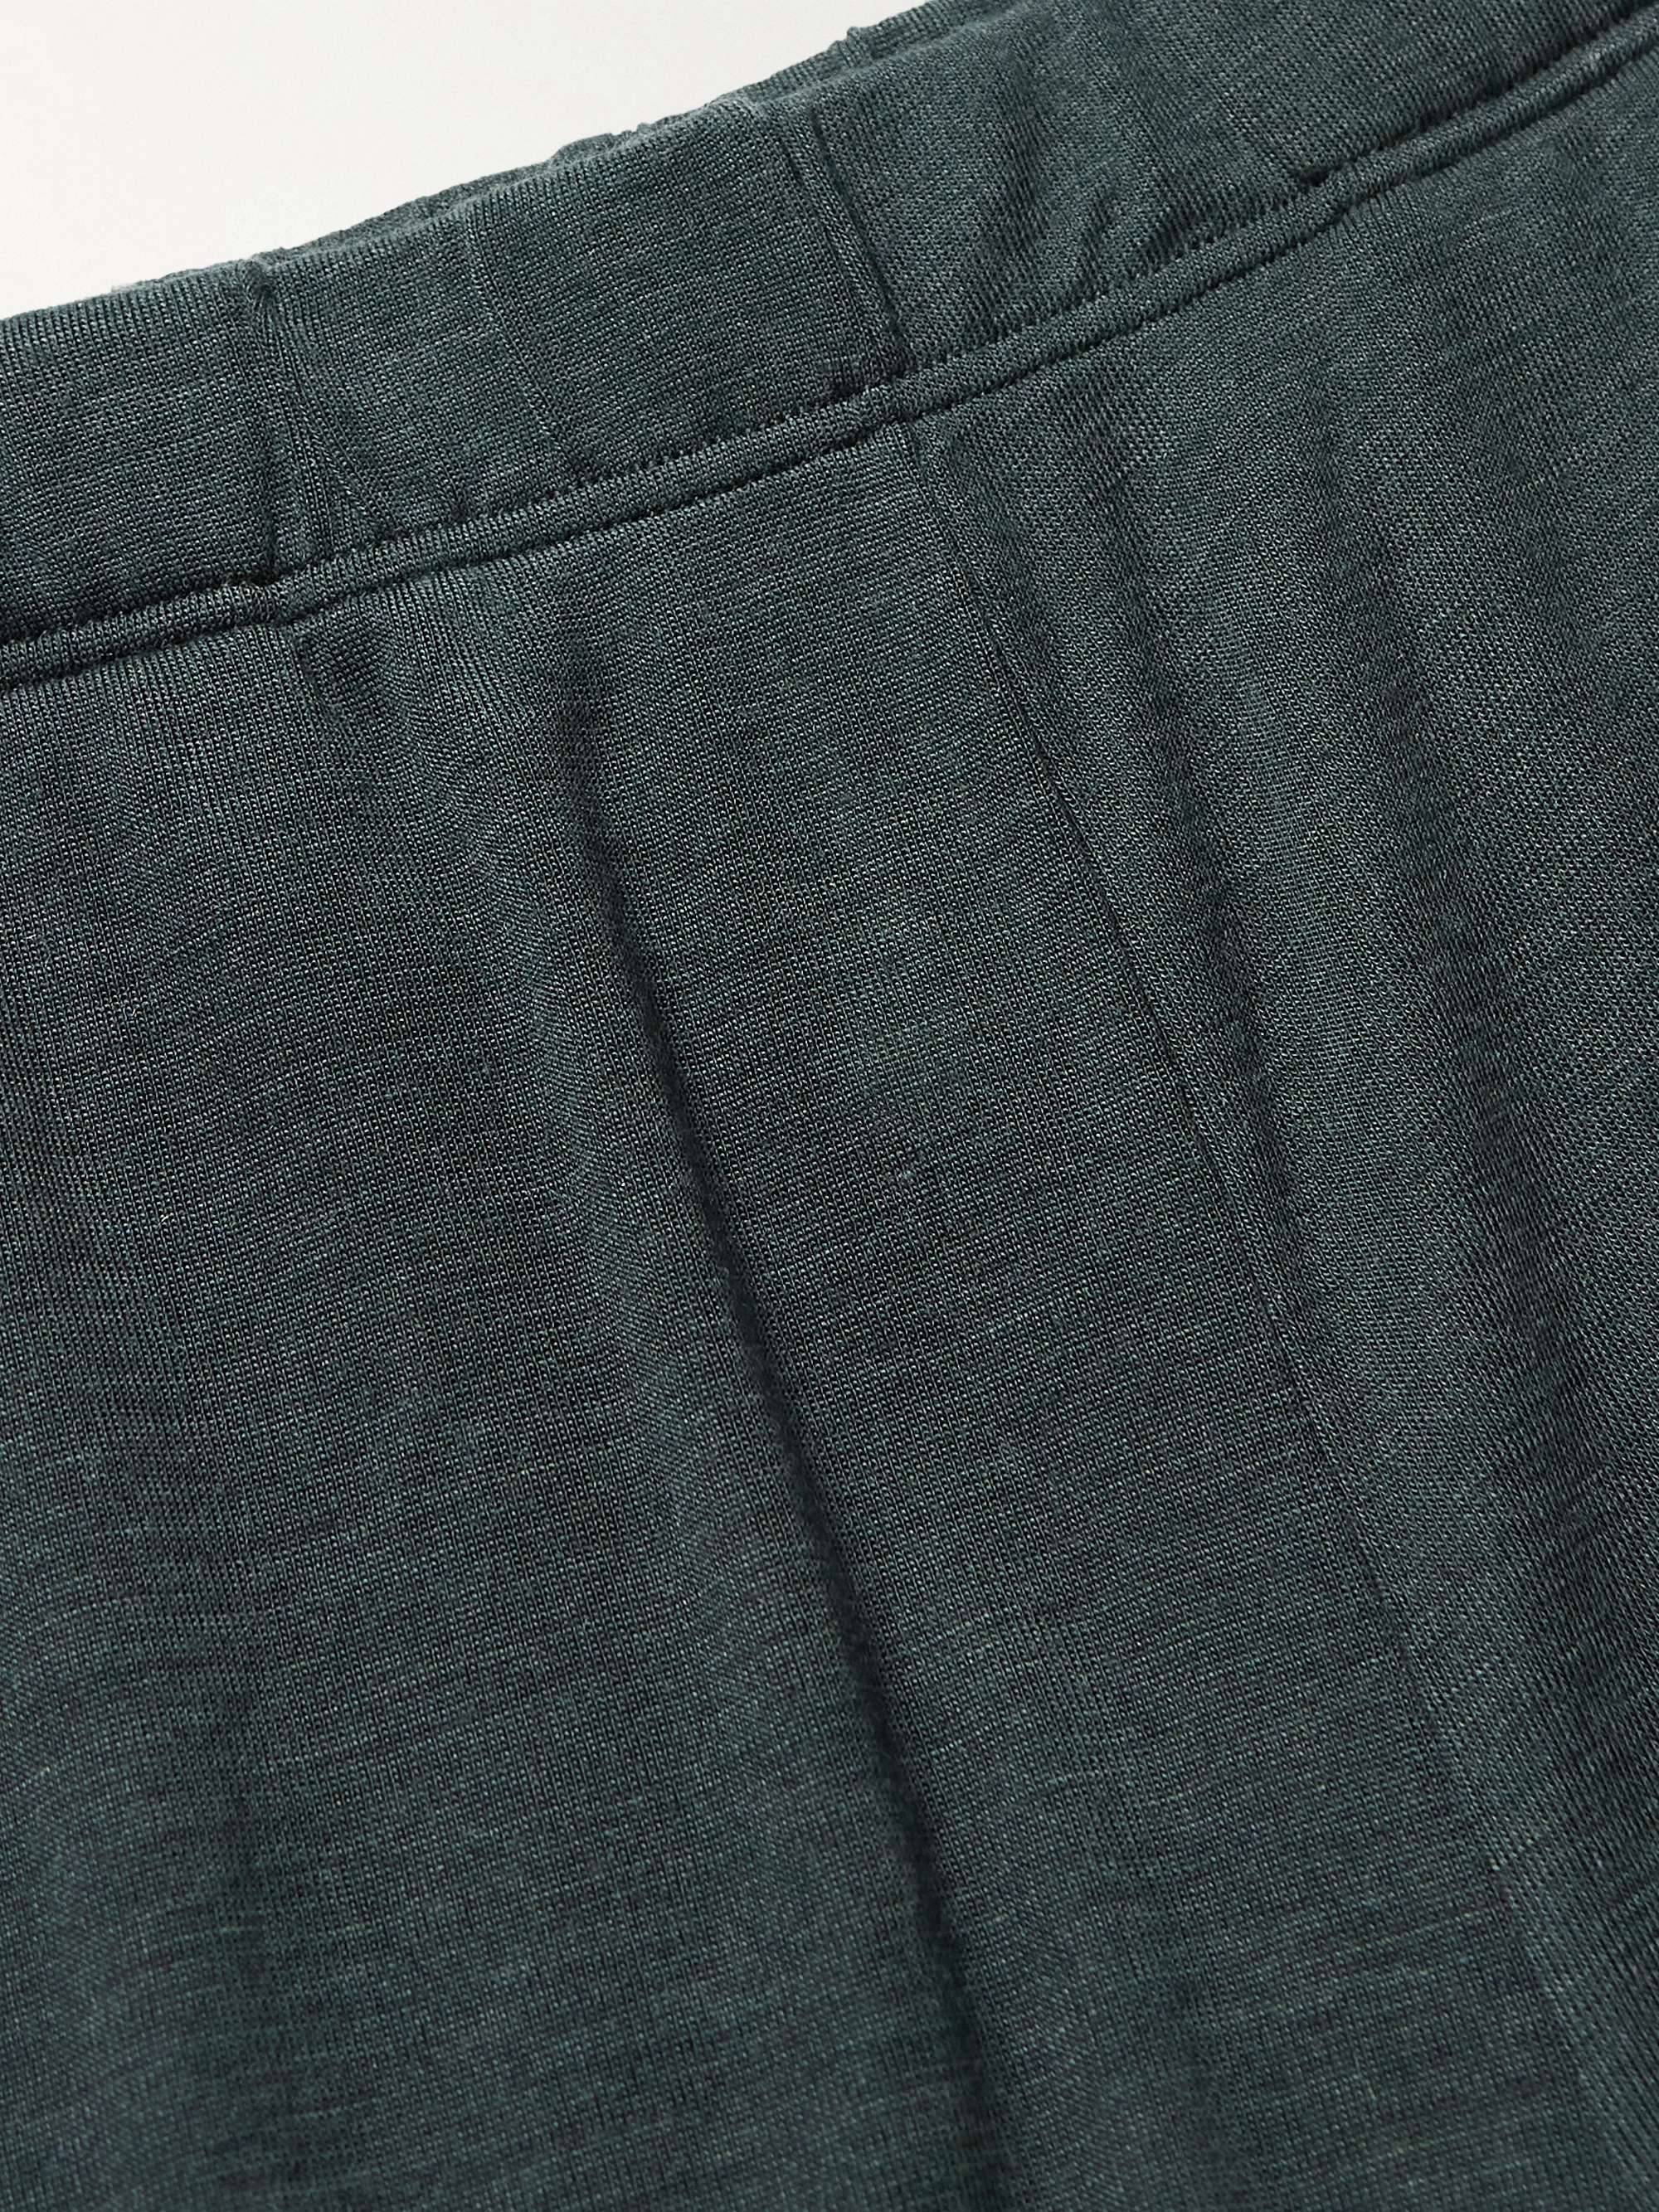 HANRO Wool and Lyocell-Blend Pyjama Trousers